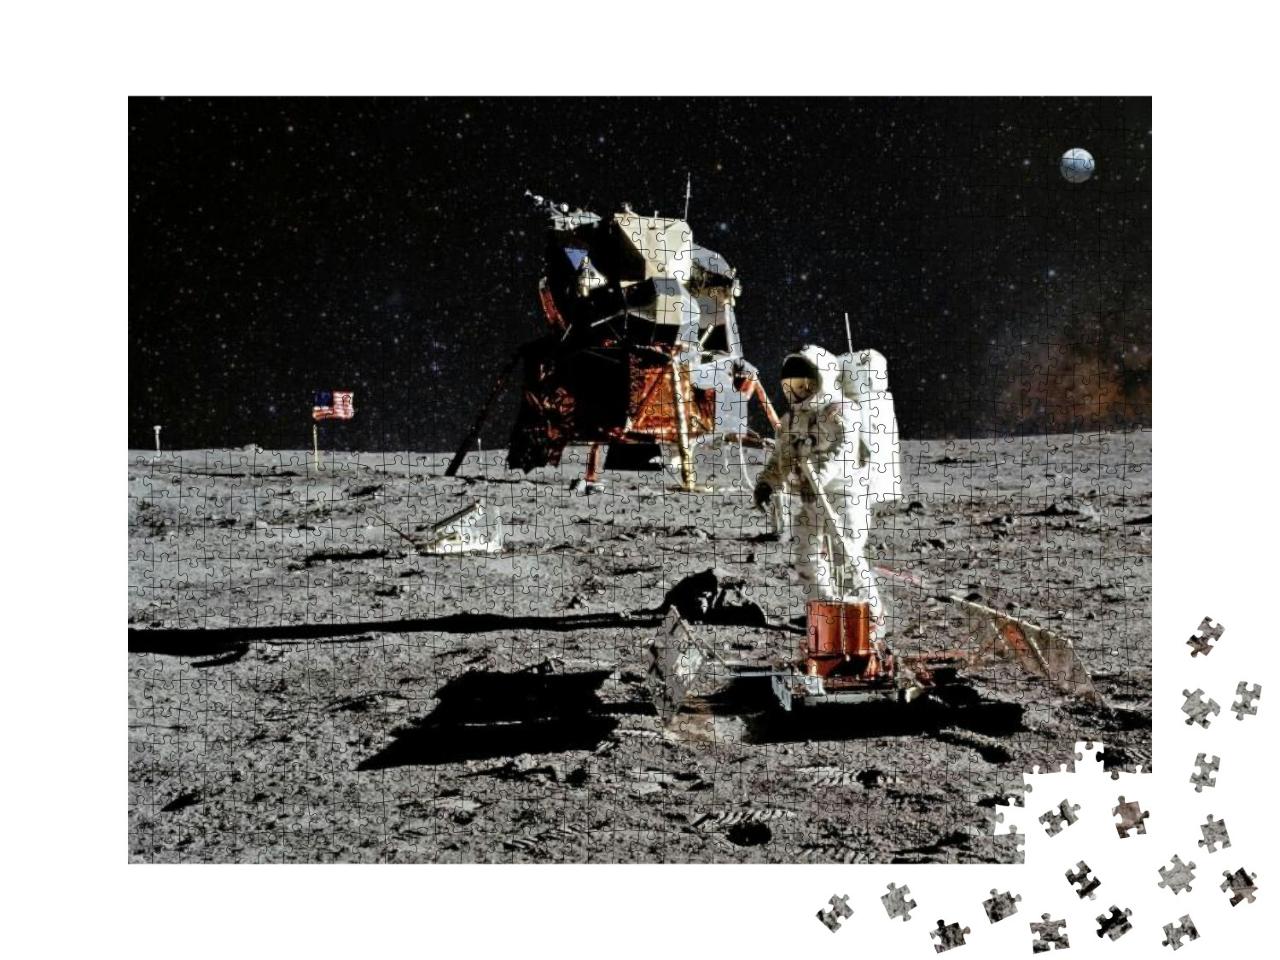 Puzzle 1000 Teile „Astronaut bei der Mondlandemission “